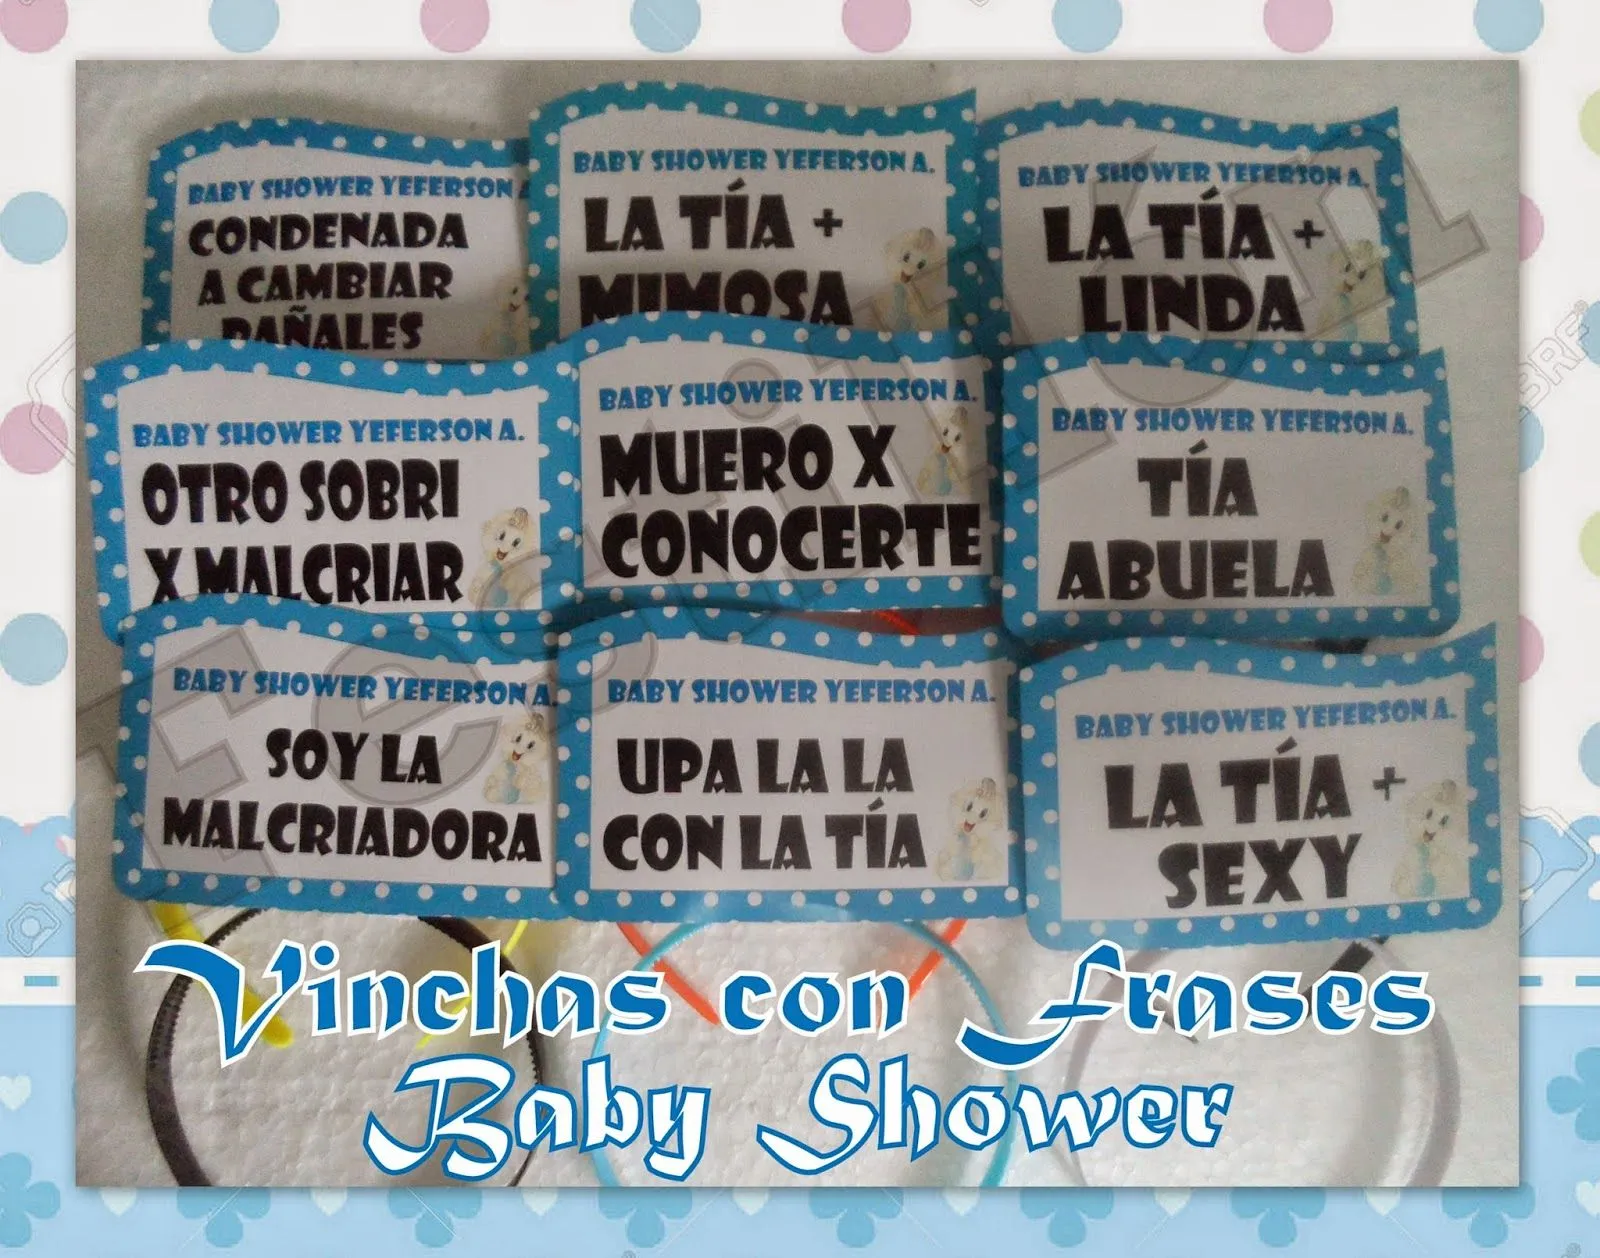 Festillón: Vinchas con Frases para Baby Shower !!!!